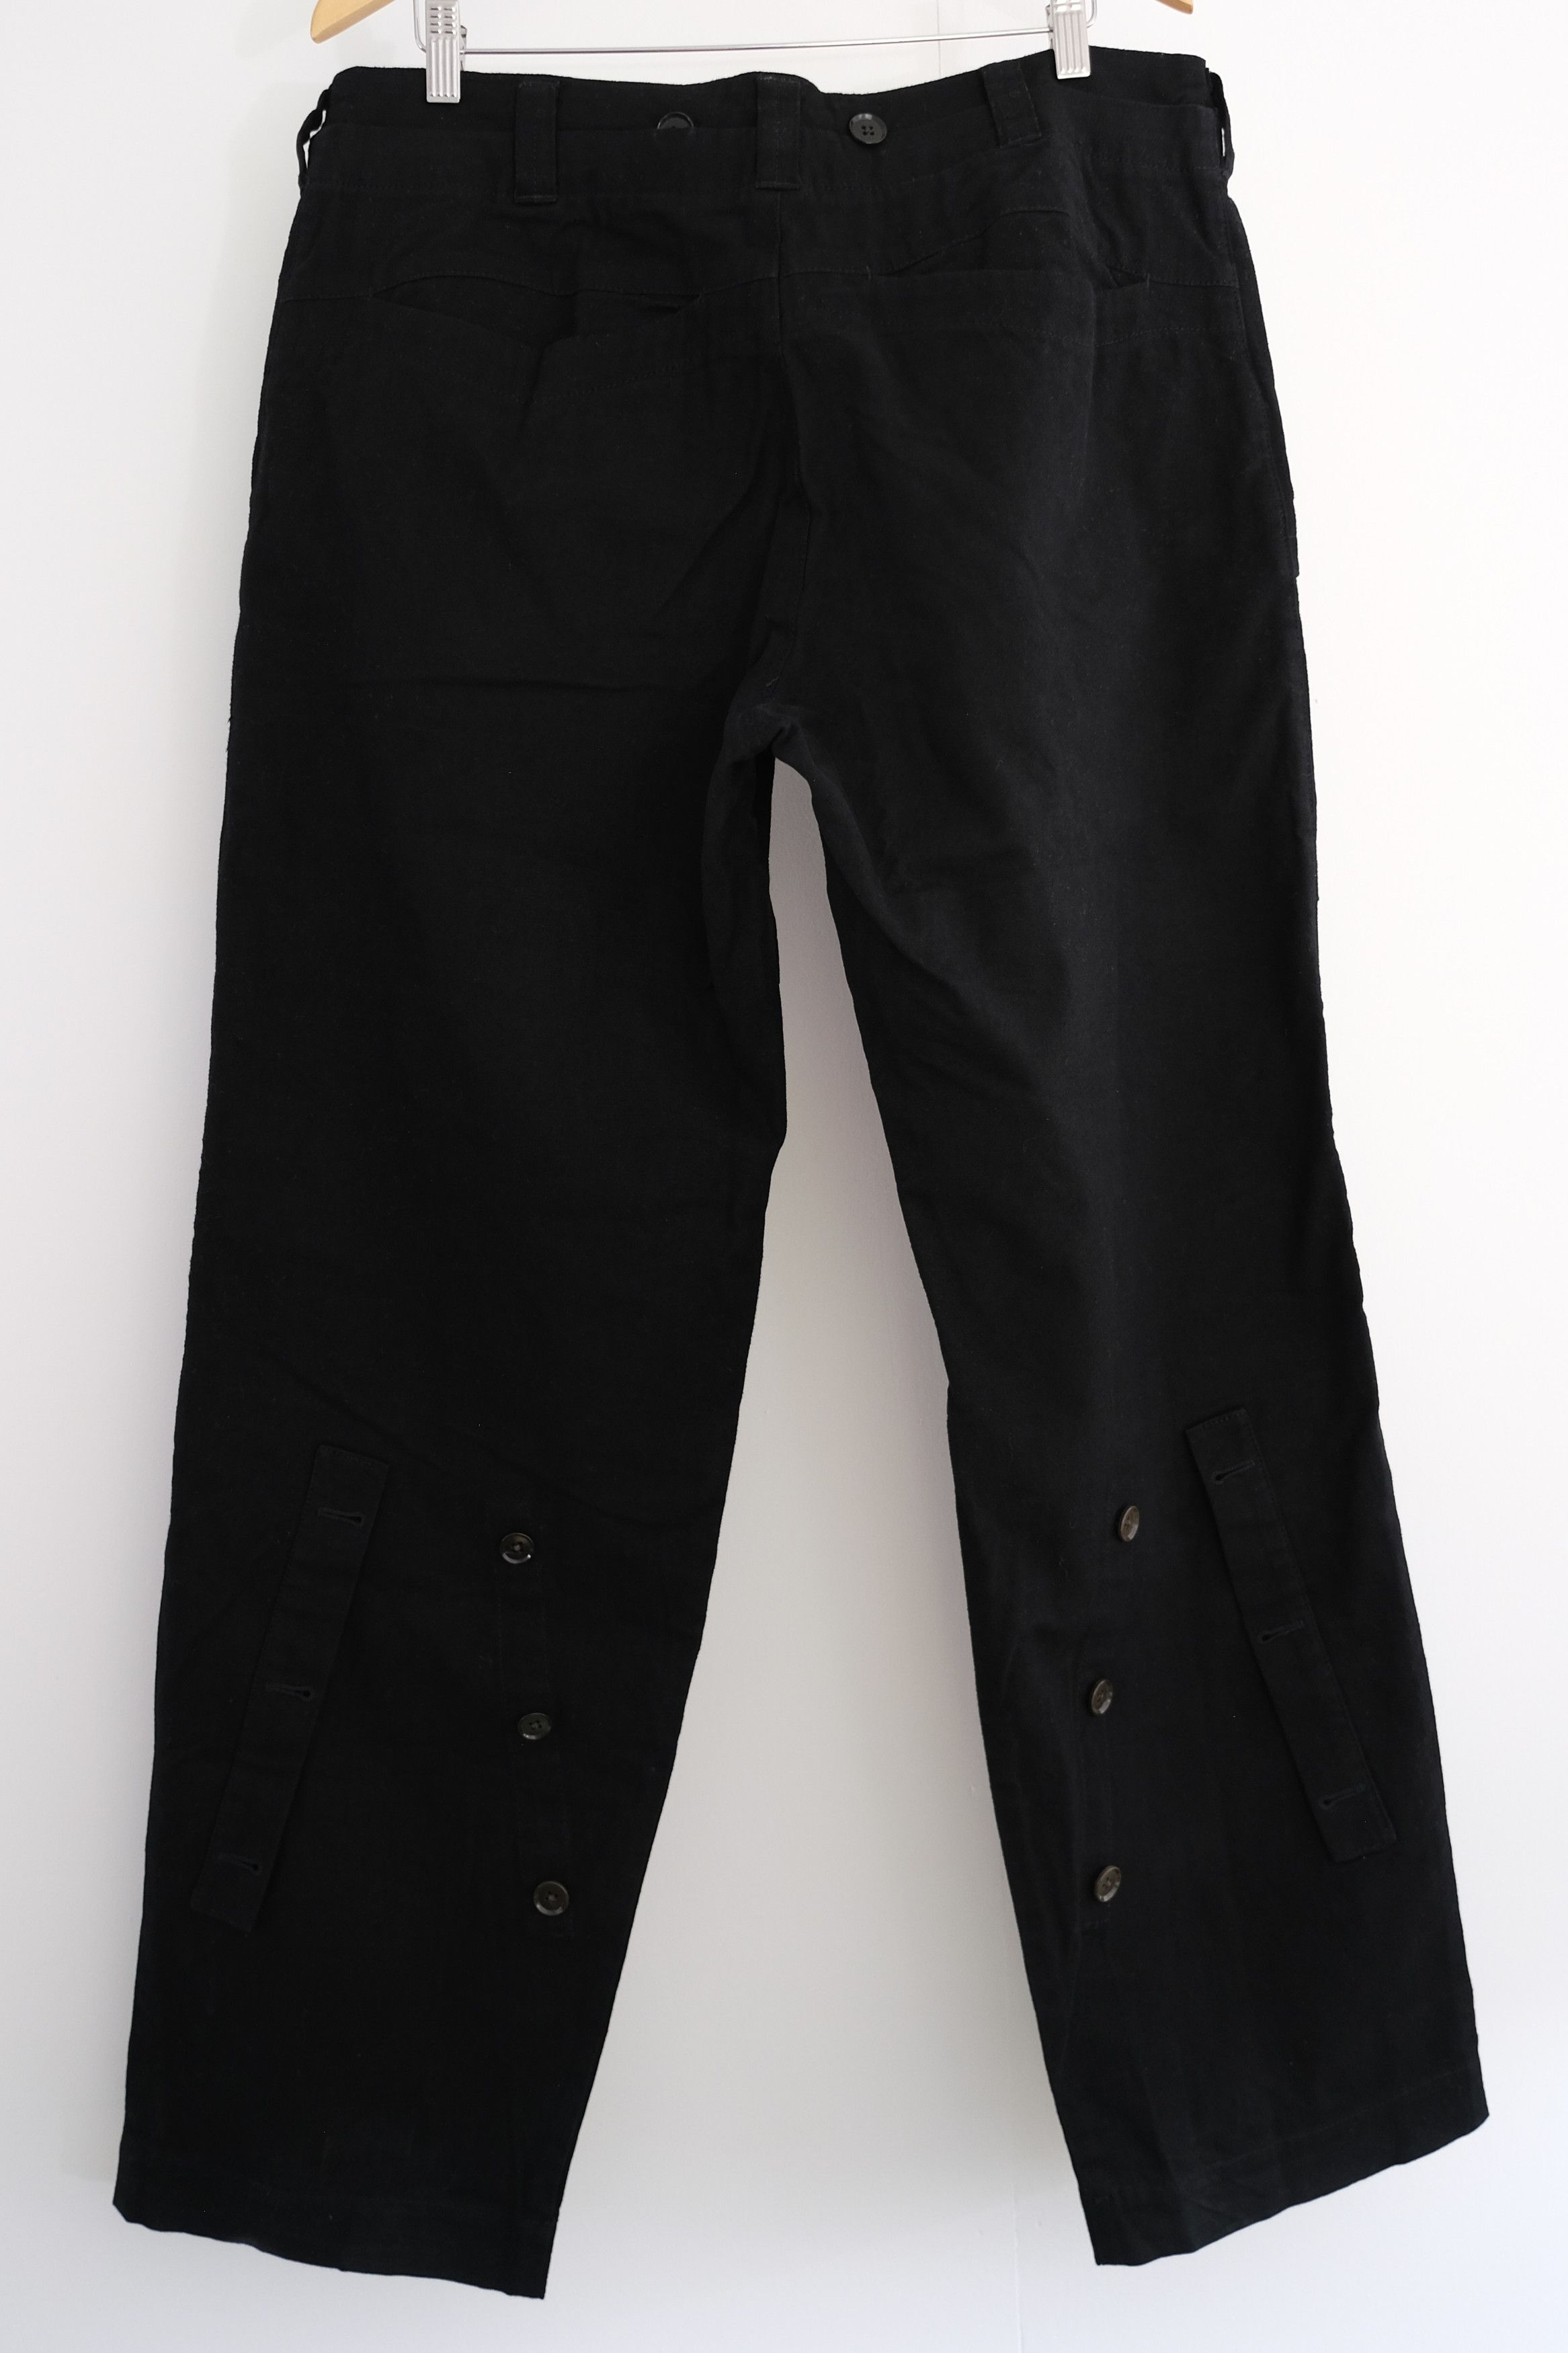 2000s Linen-Cotton Hem Button and Shadowbox Knee Pants - 21